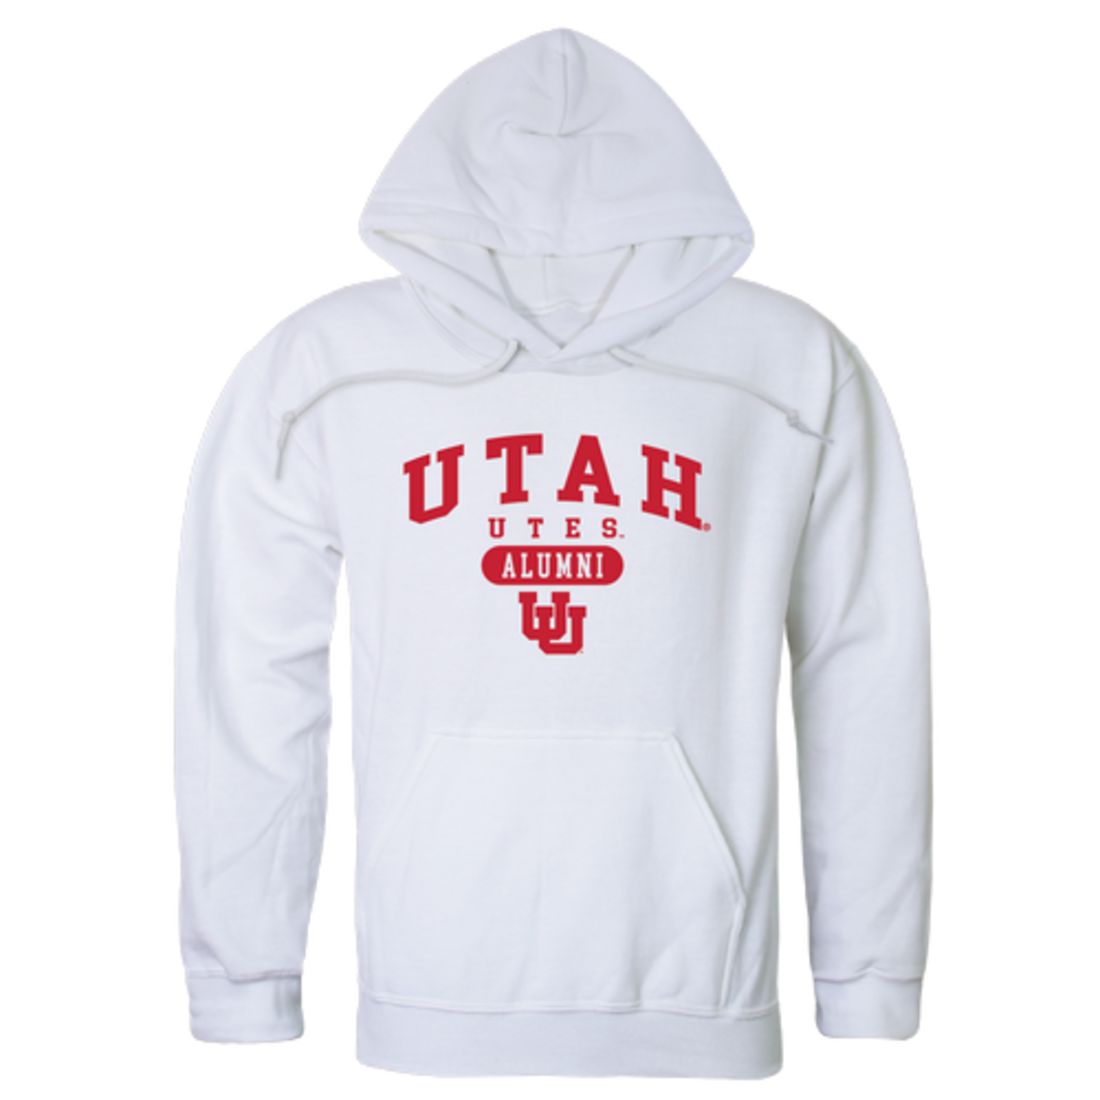 University of Utah Utes Alumni Fleece Hoodie Sweatshirts Heather Grey-Campus-Wardrobe